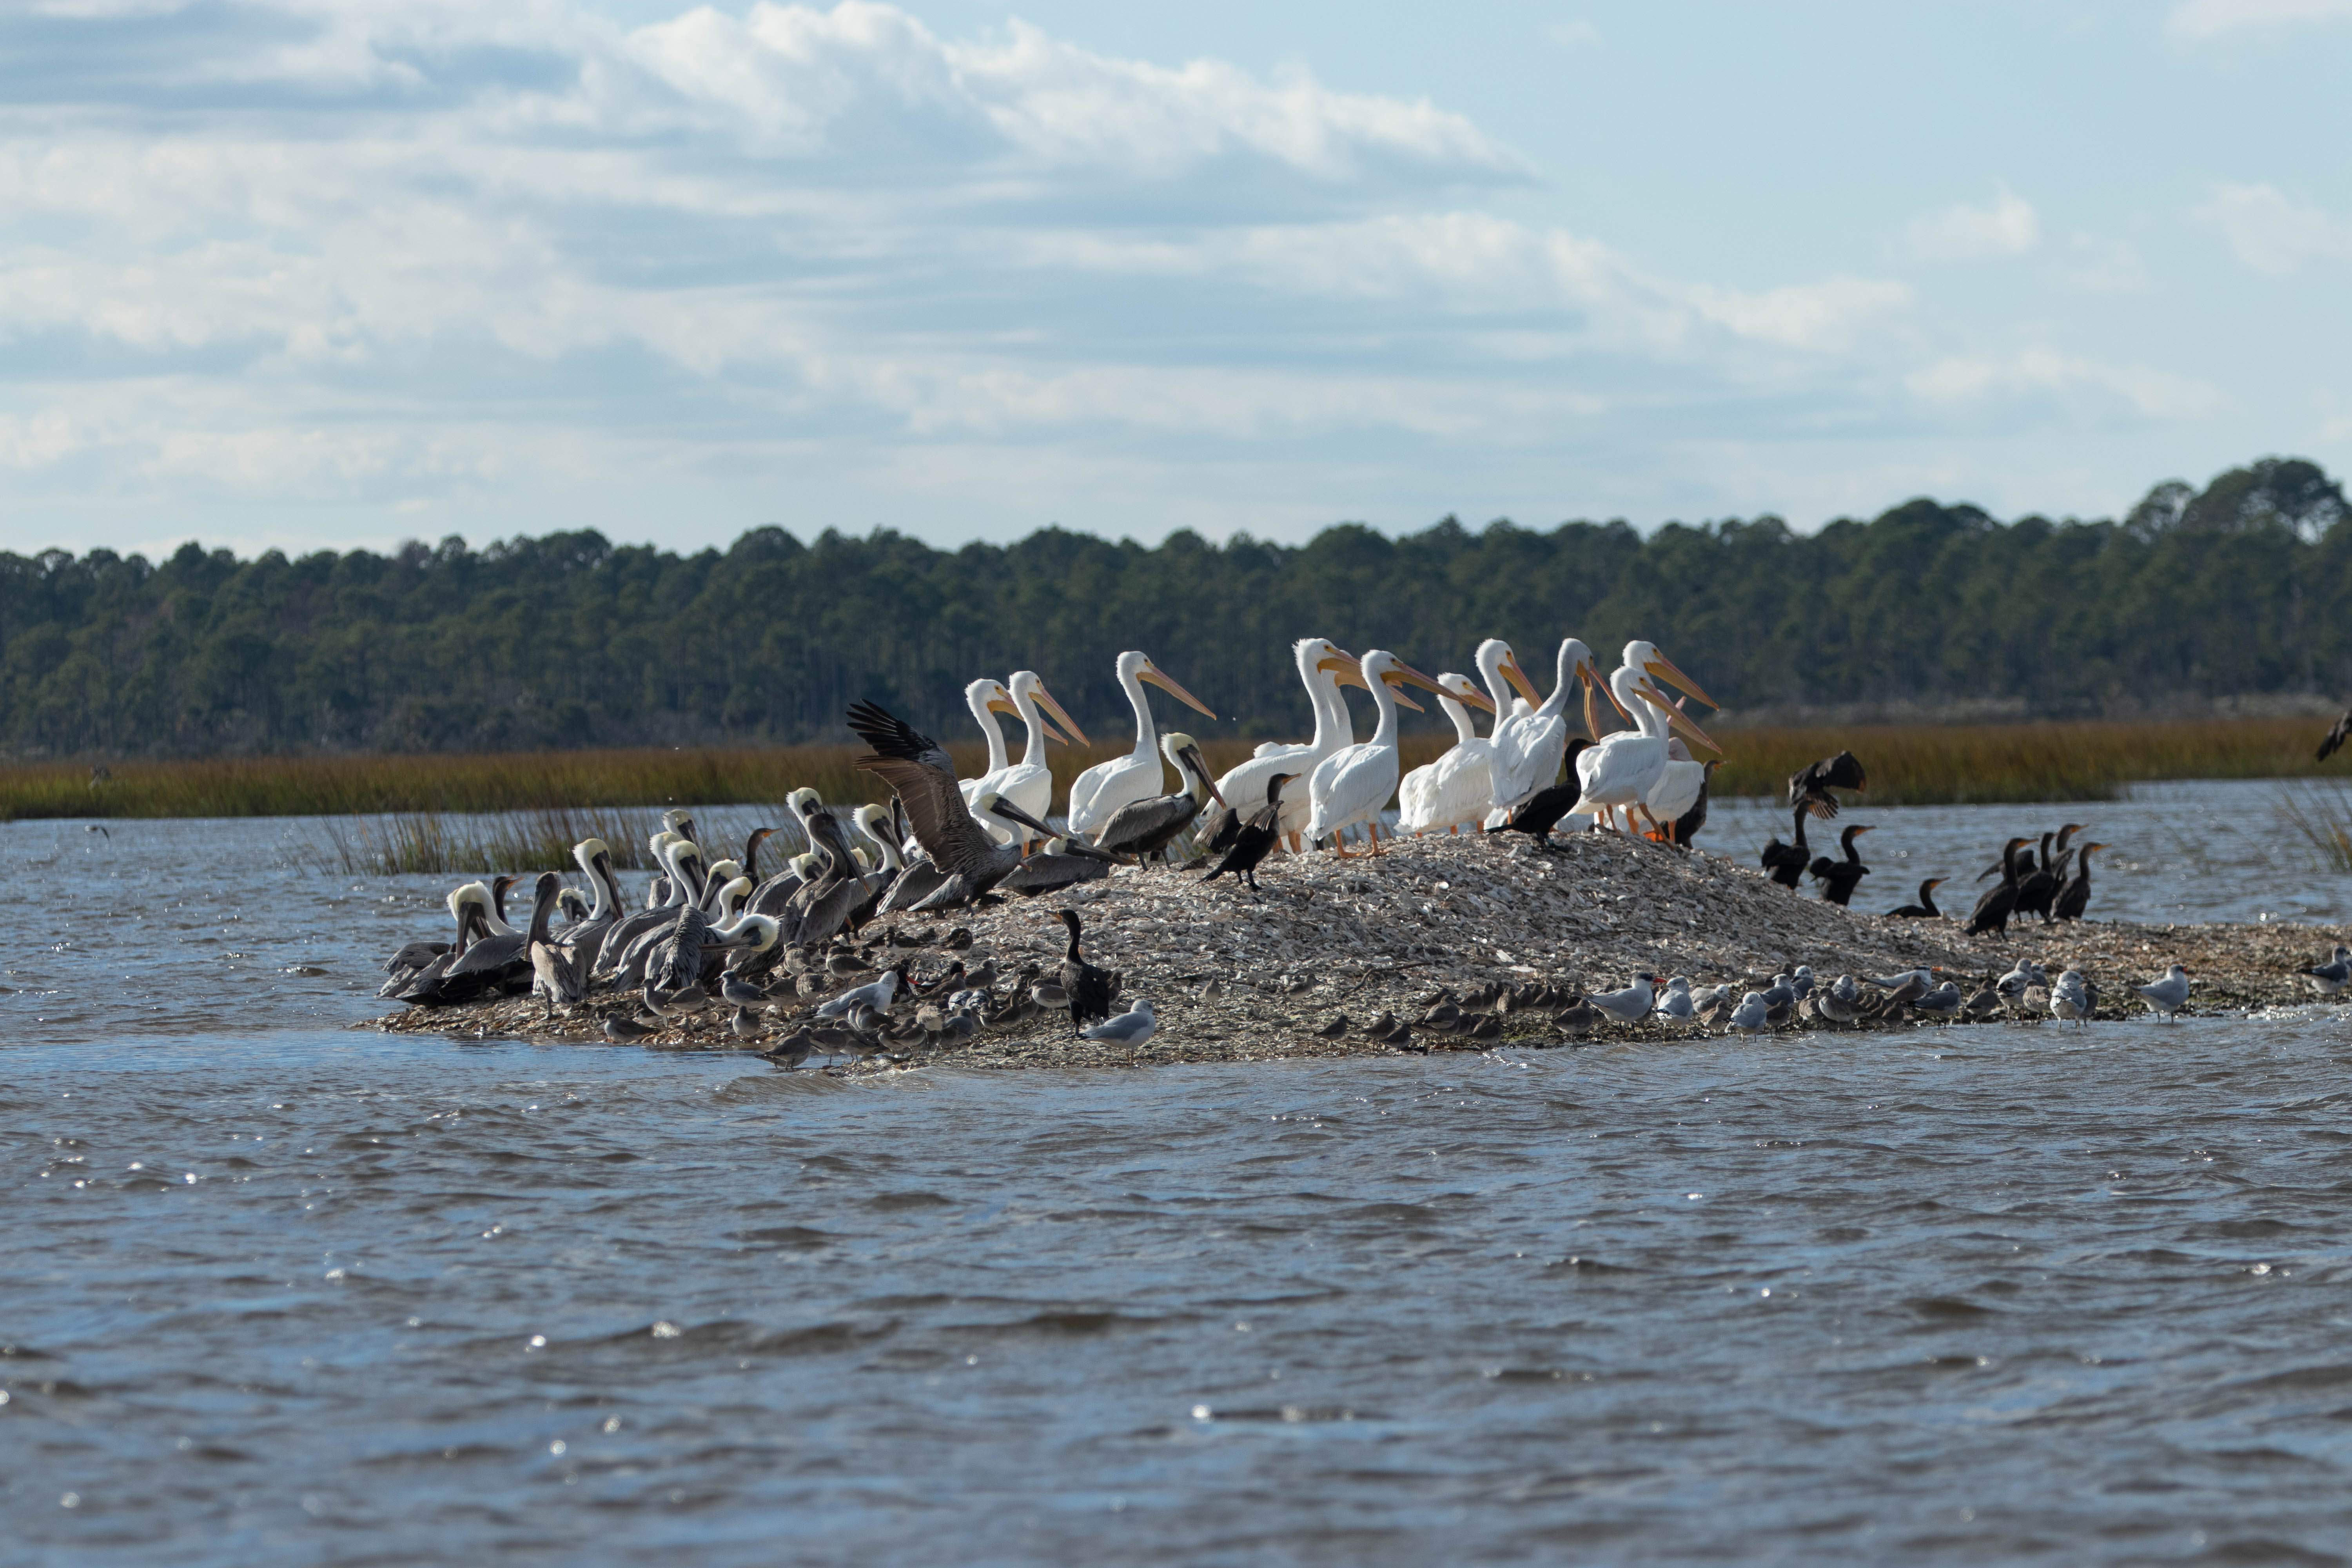 White Pelicans, brown pelicans, cormorants, and other shorebirds.